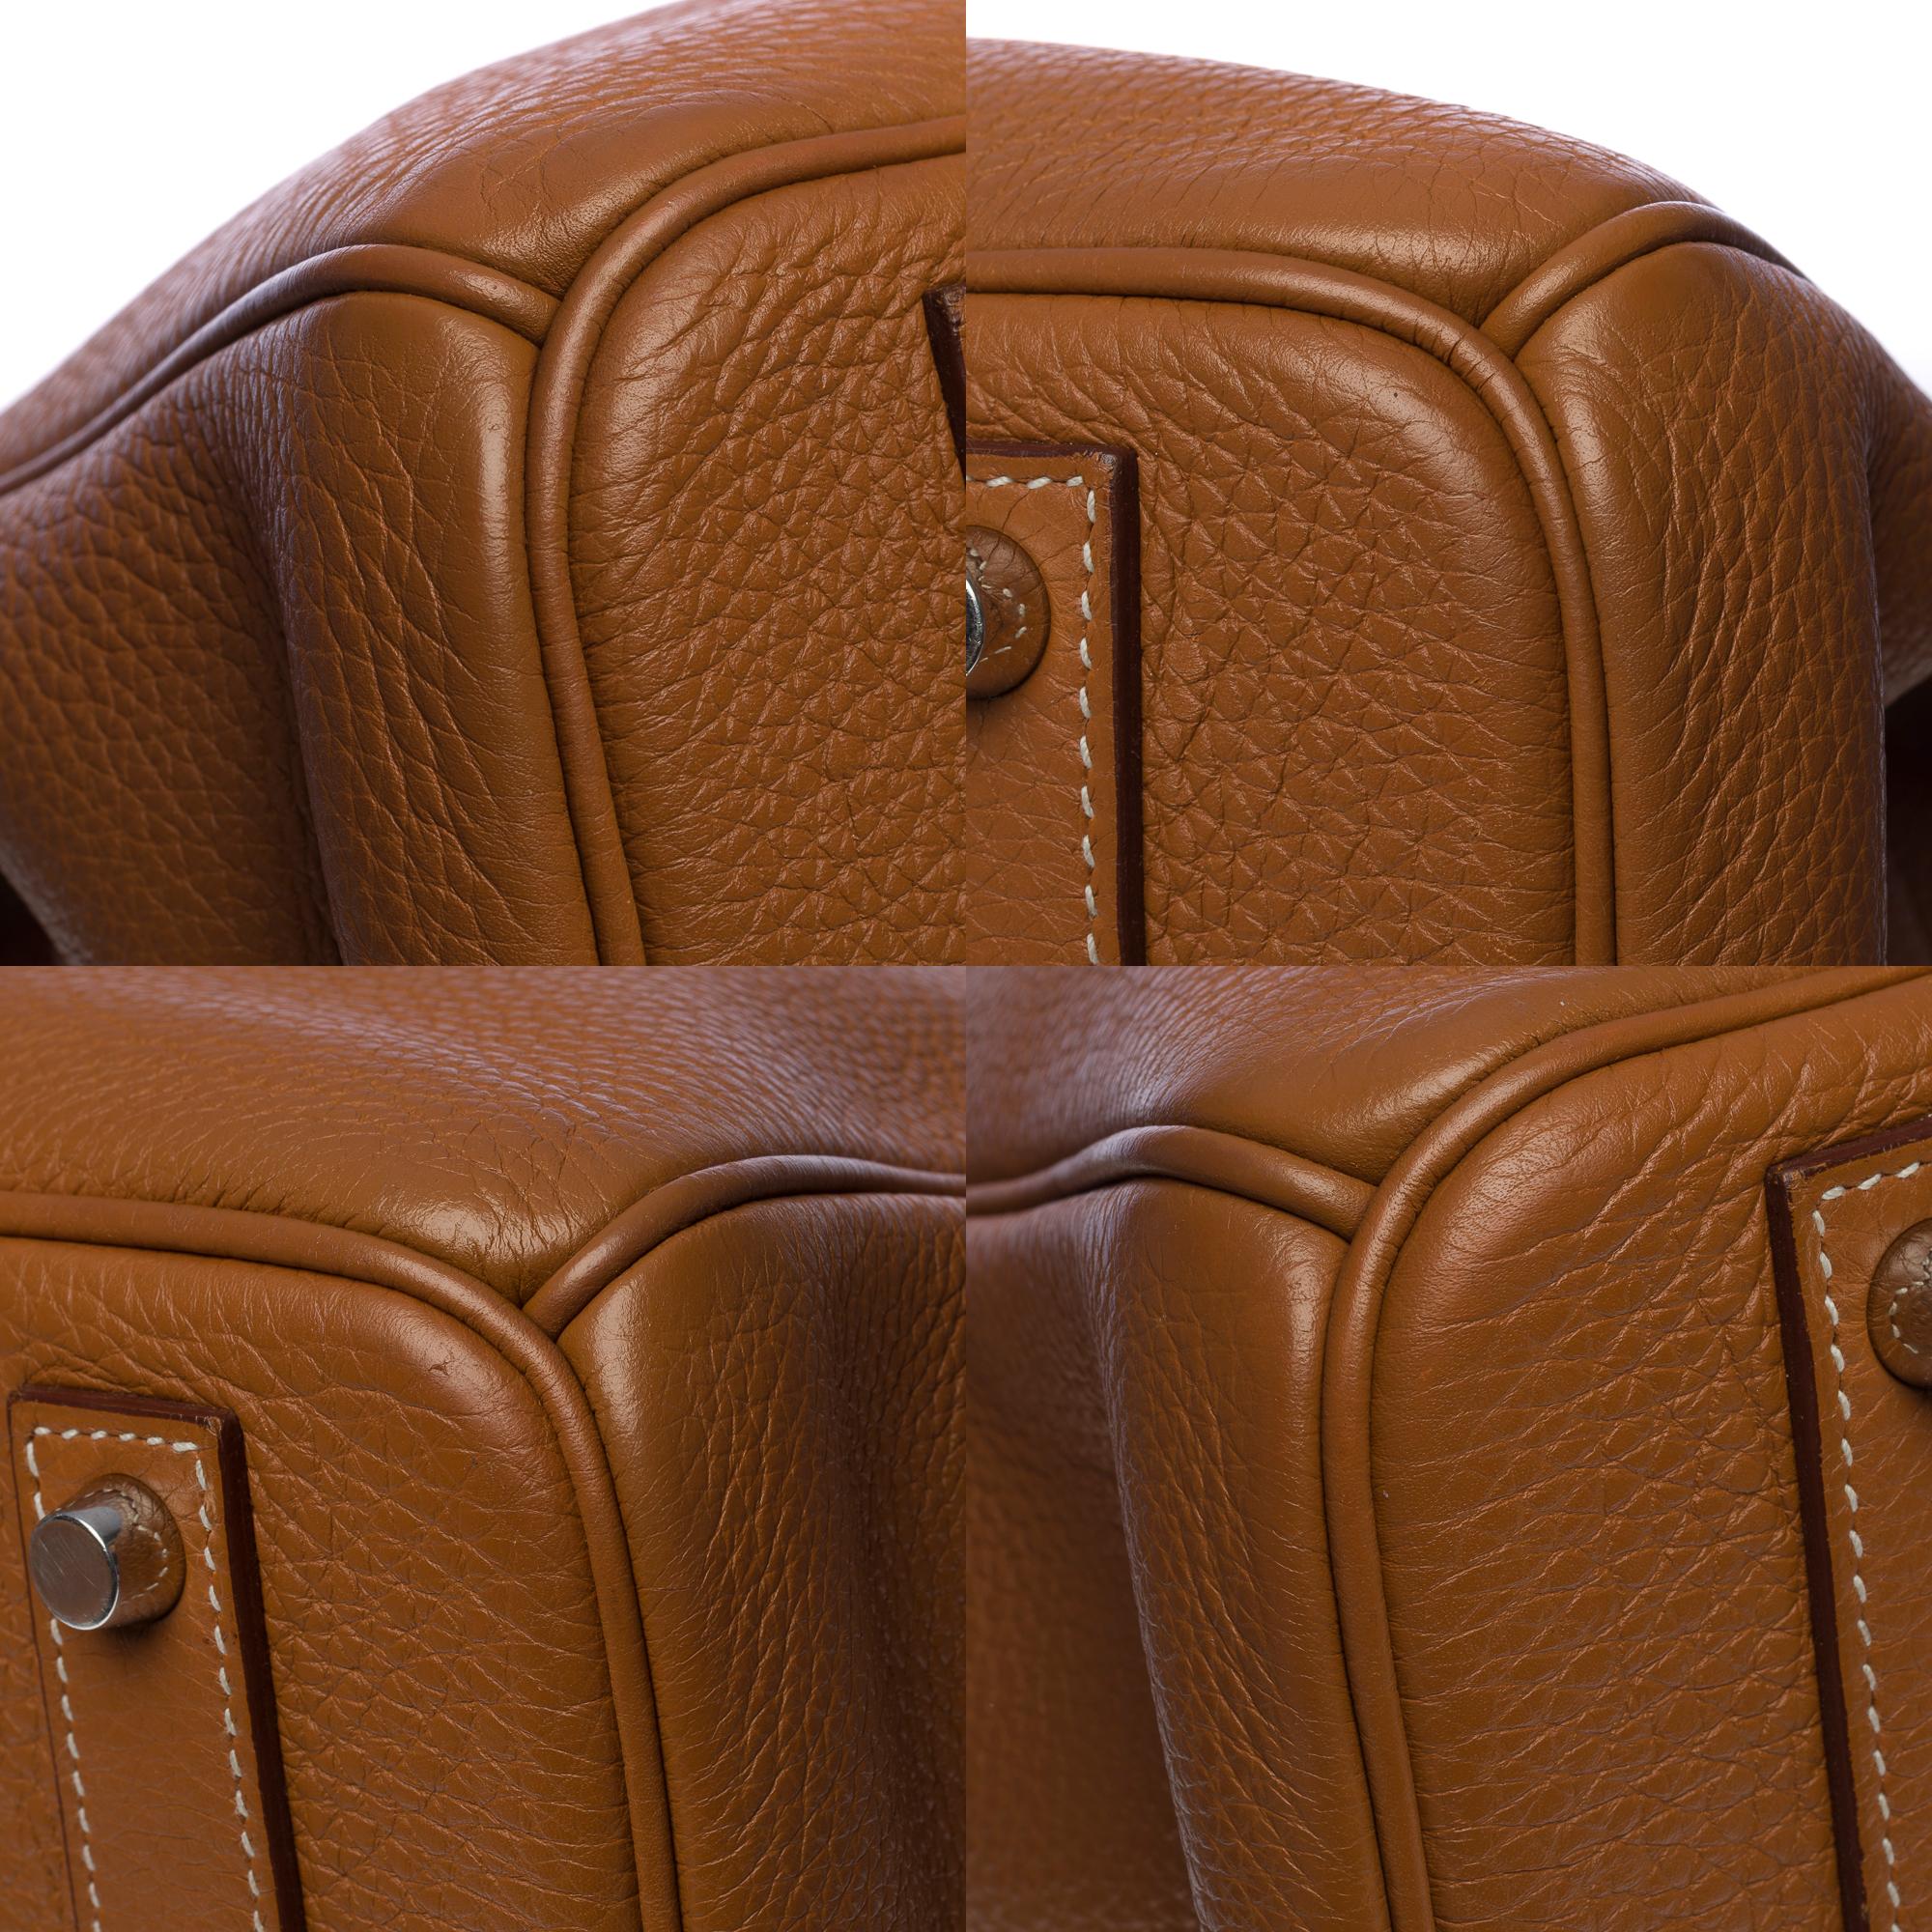 Stunning Hermes Birkin 40cm handbag in Camel Togo leather, SHW 4